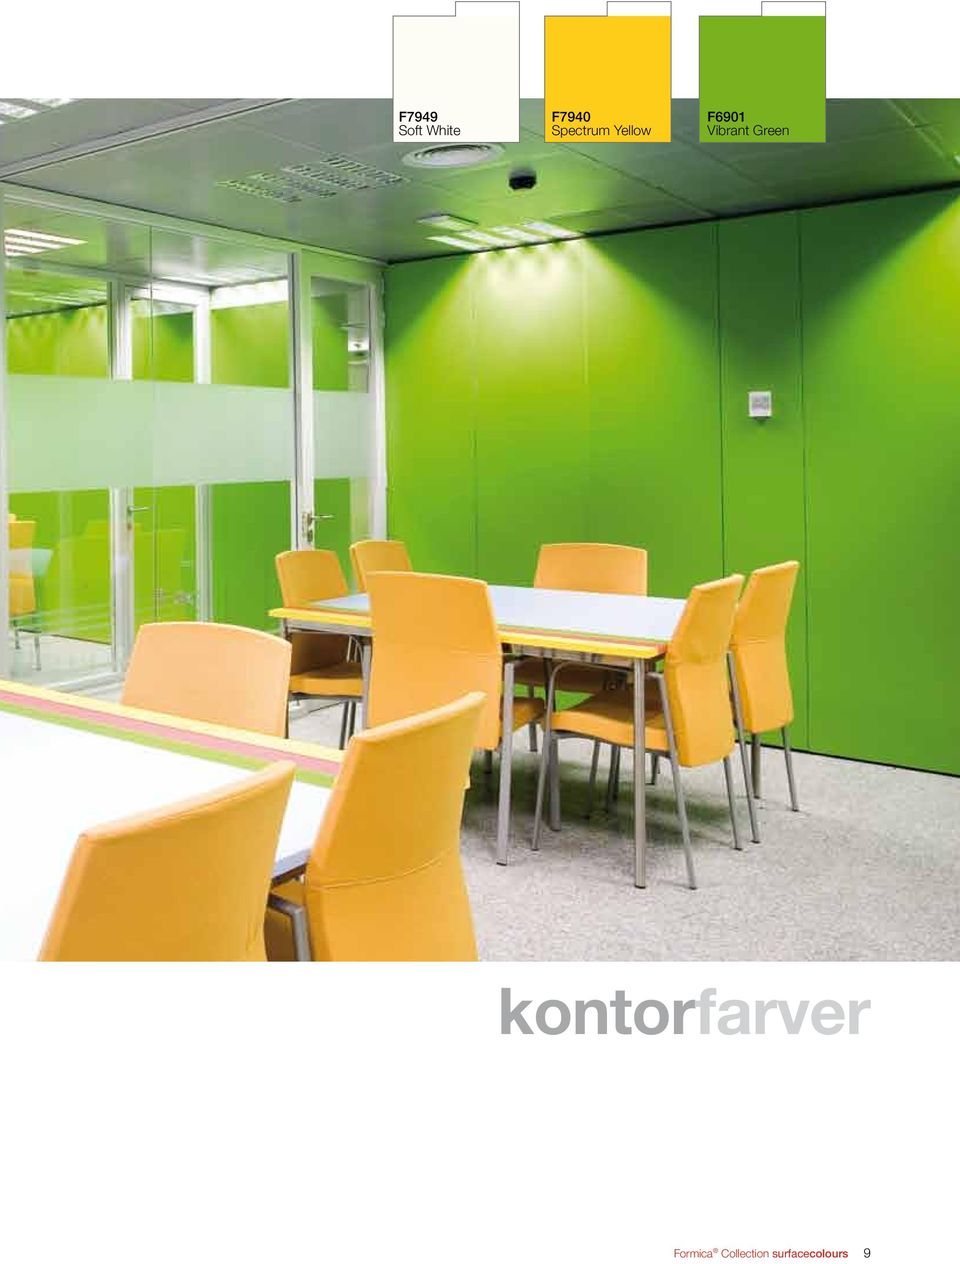 Vibrant Green kontorfarver